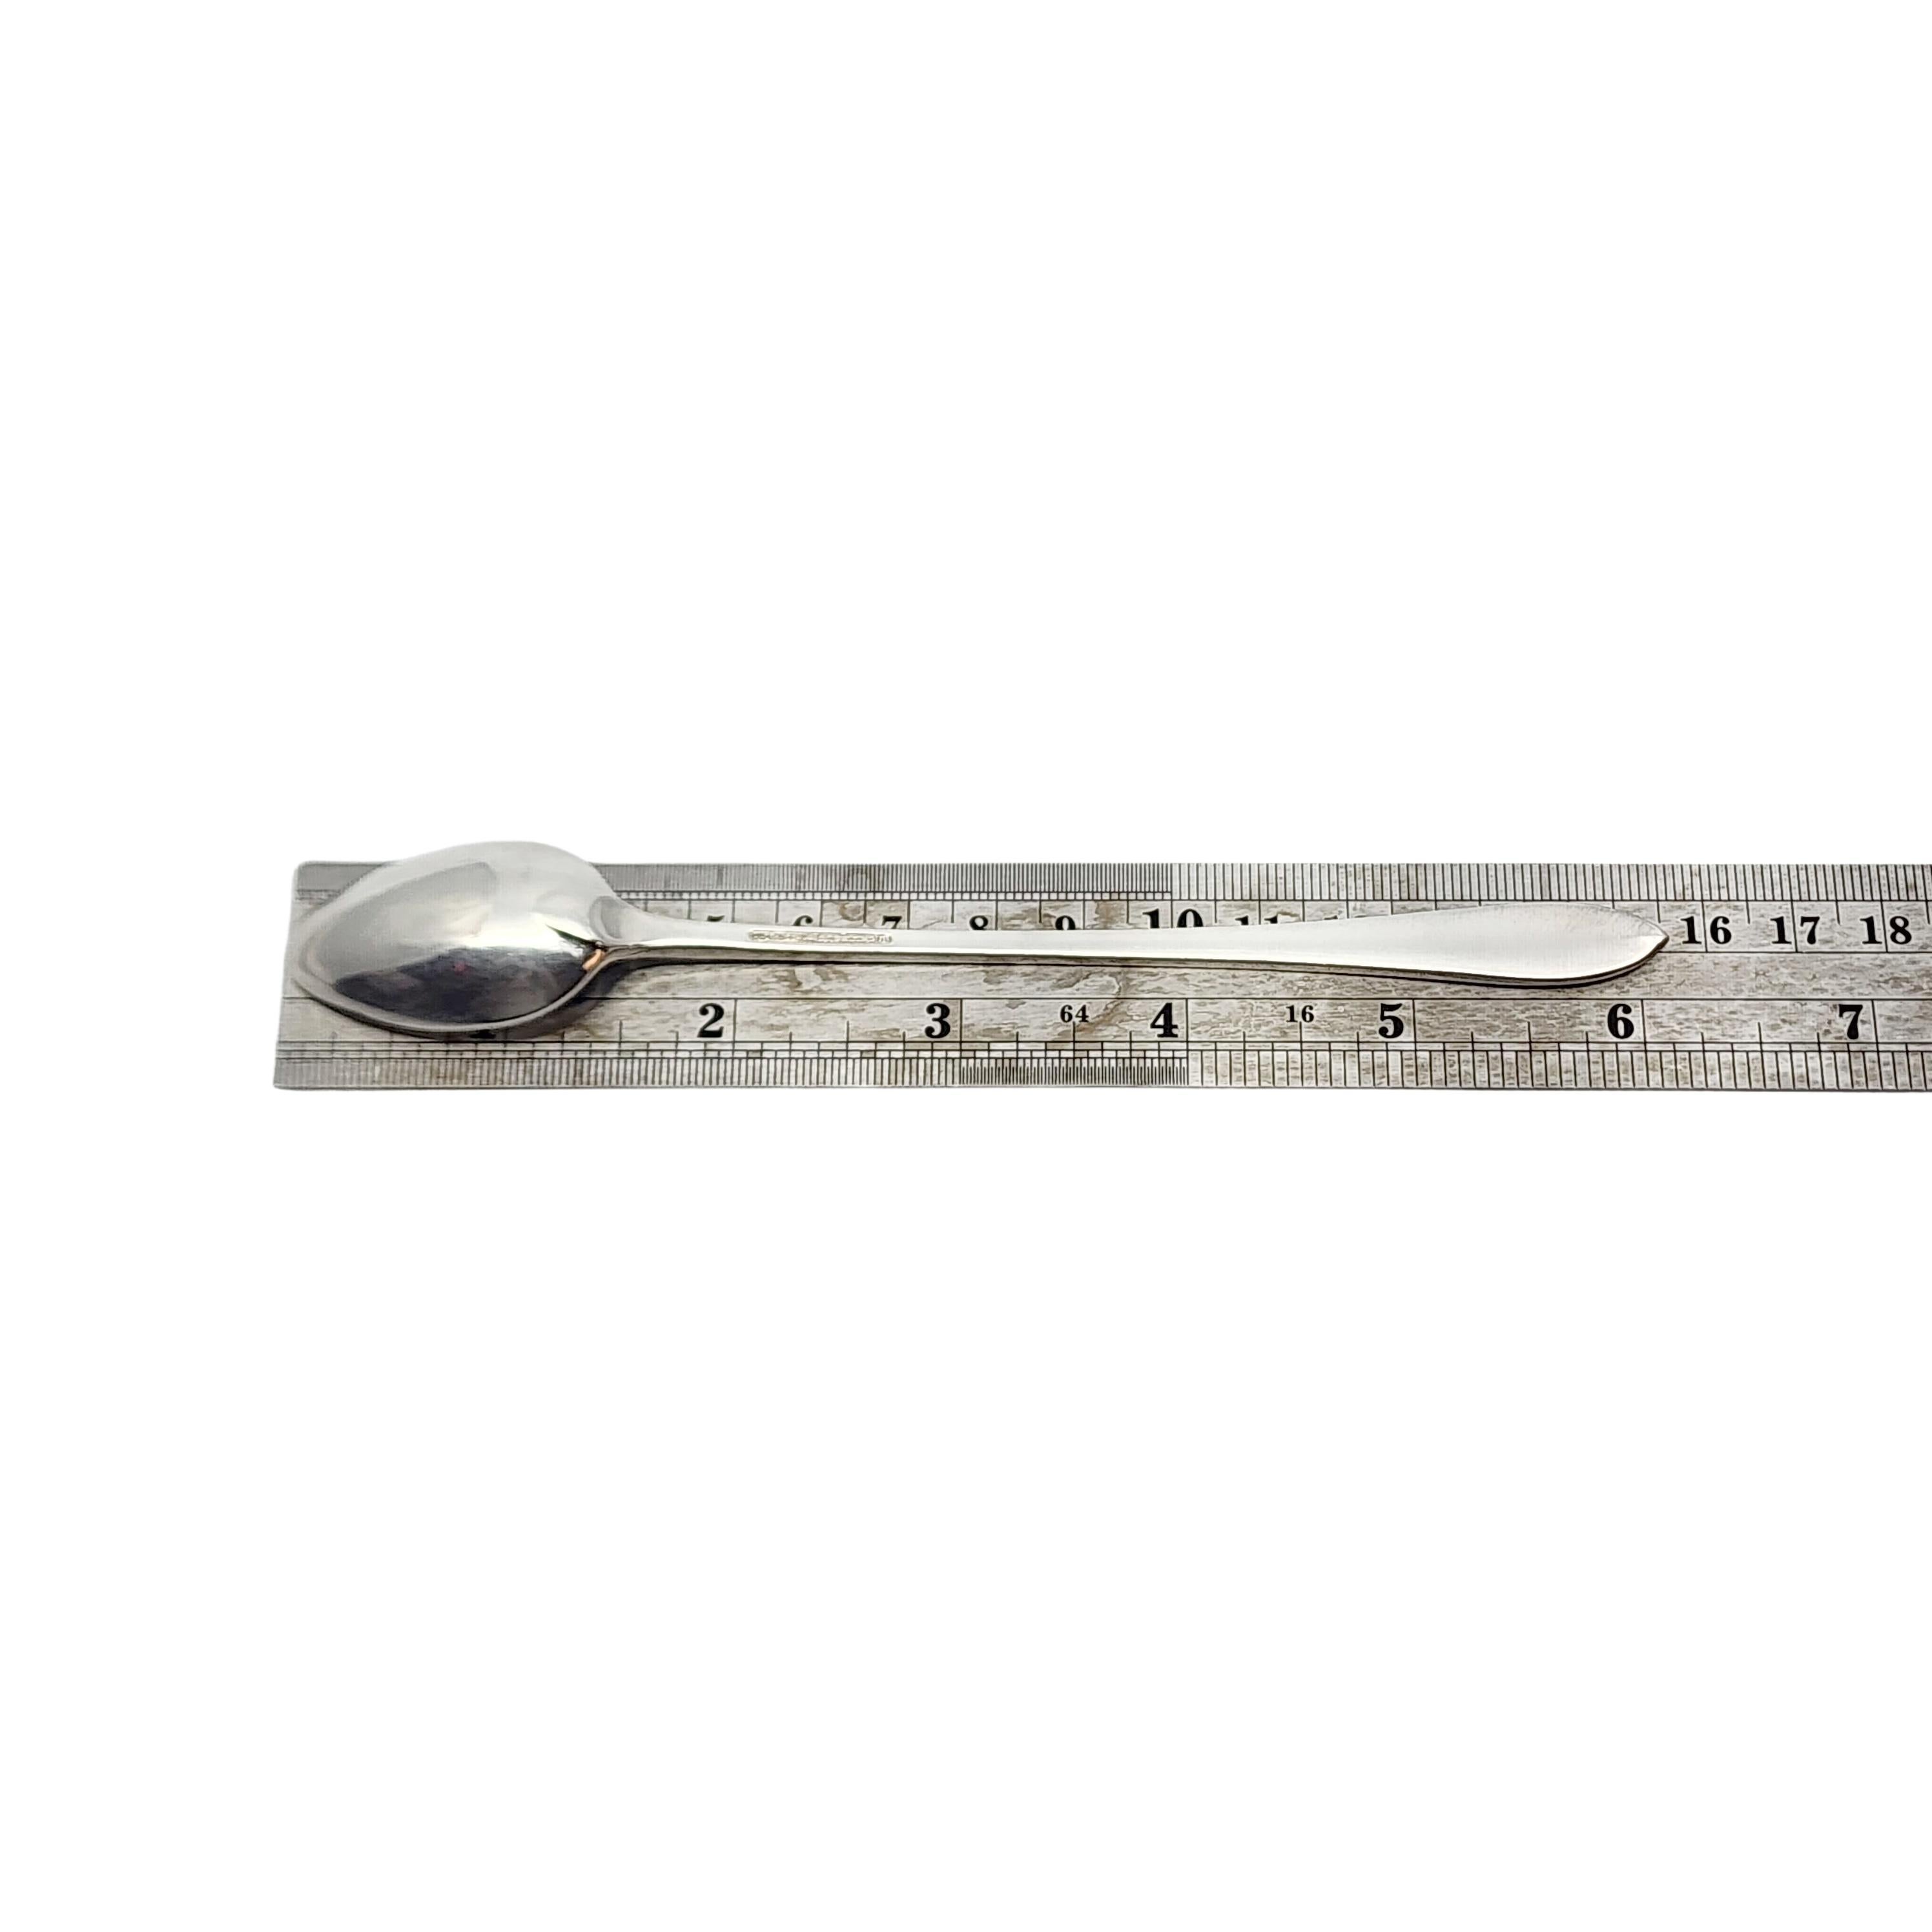 Tiffany & Co Faneuil Sterling Silver Baby Feeding Spoon #15490 6